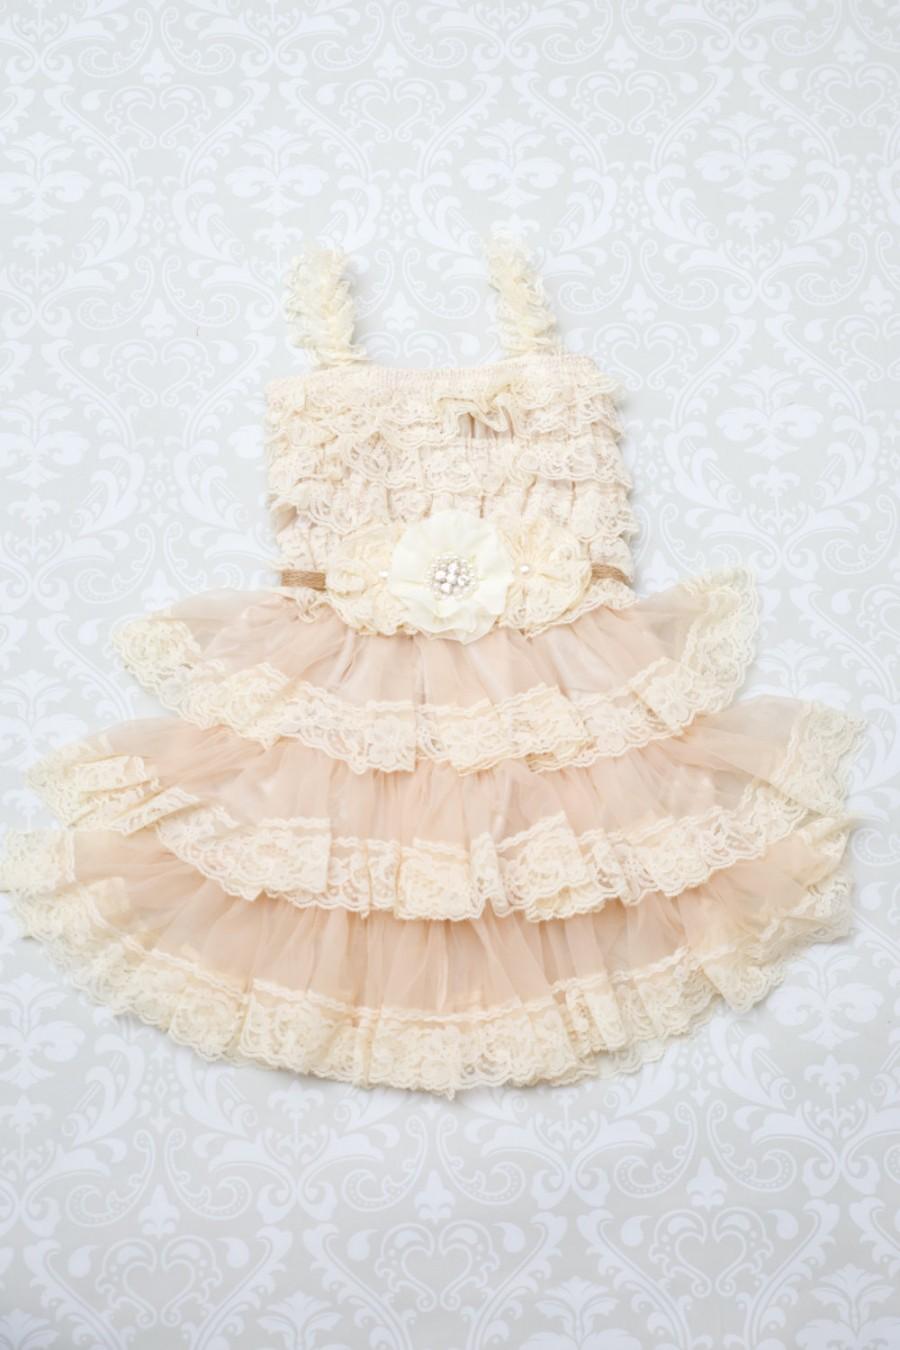 Wedding - Ivory Flower Girl Dress/Shabby Chic Flower Girl /Wheat Cream Flower Girl/Country Wedding-lvory-Champagne Flower Girl Dress-Shabby Chic Dress